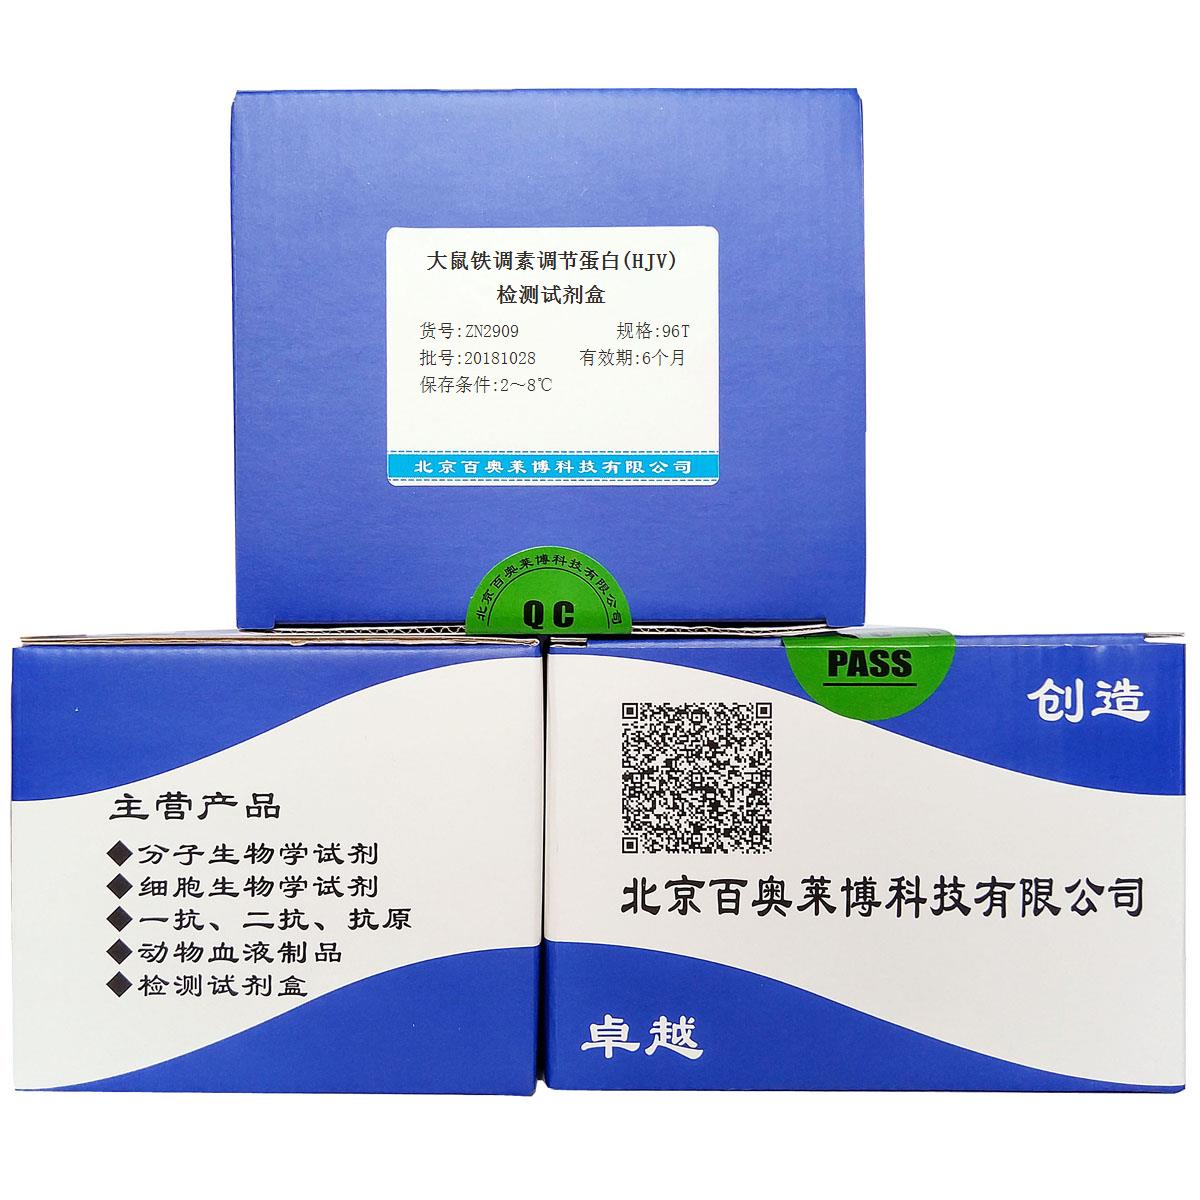 大鼠铁调素调节蛋白(HJV)检测试剂盒